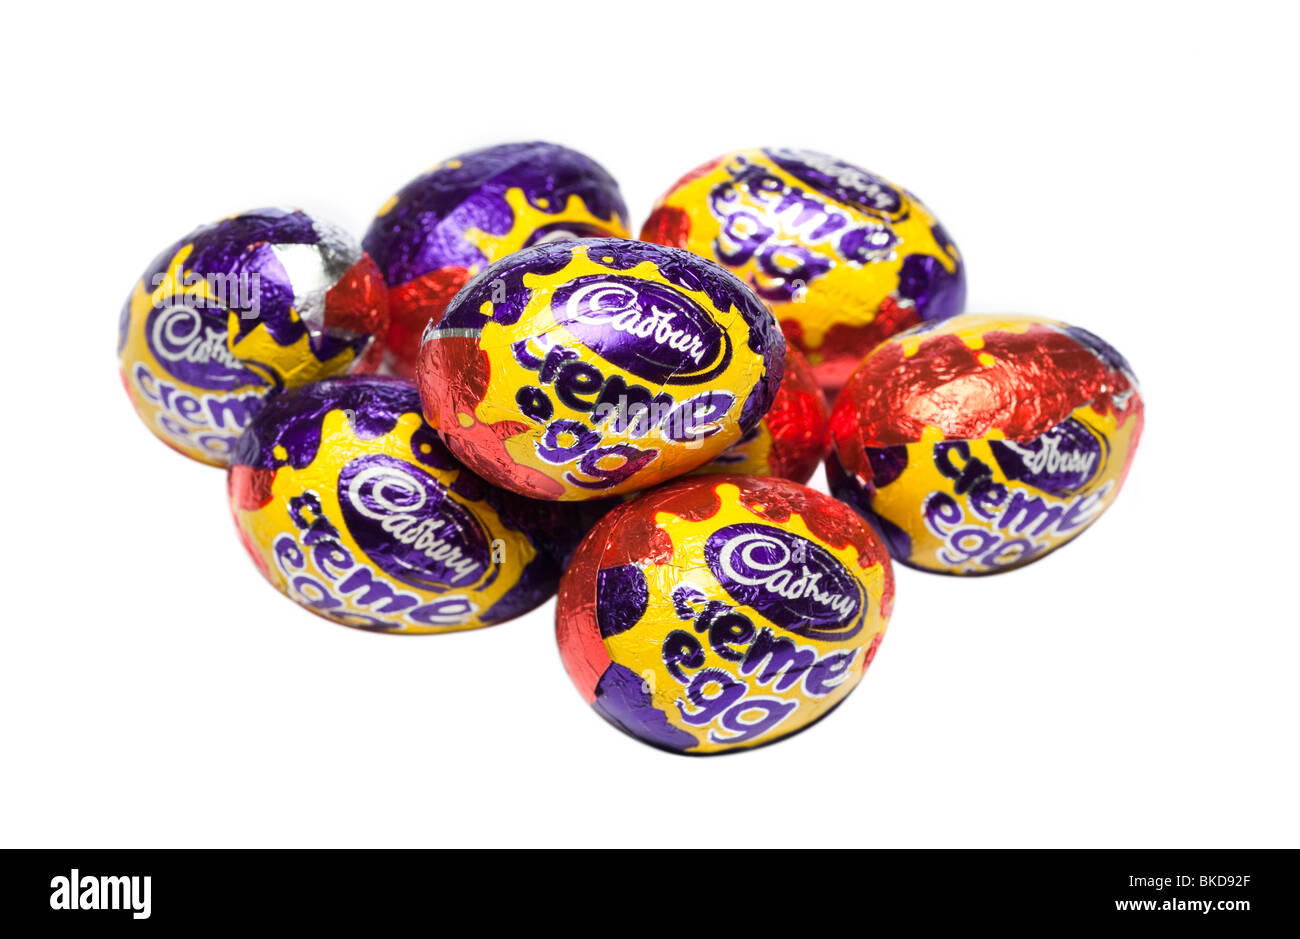 Cadbury's creme eggs cutout Stock Photo